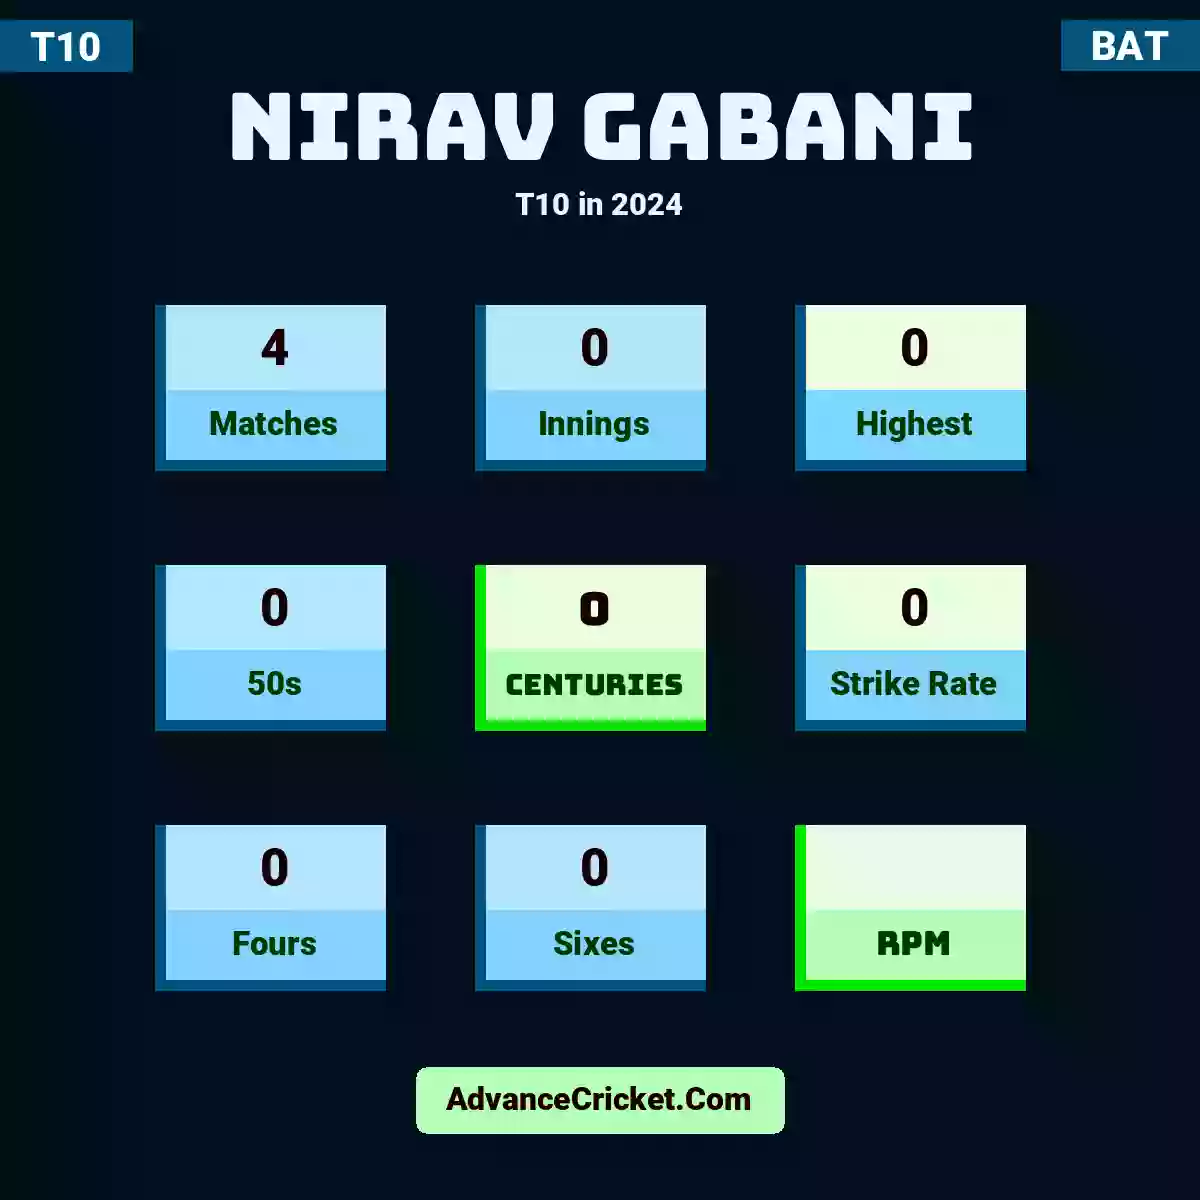 Nirav Gabani T10  in 2024, Nirav Gabani played 4 matches, scored 0 runs as highest, 0 half-centuries, and 0 centuries, with a strike rate of 0. N.Gabani hit 0 fours and 0 sixes.